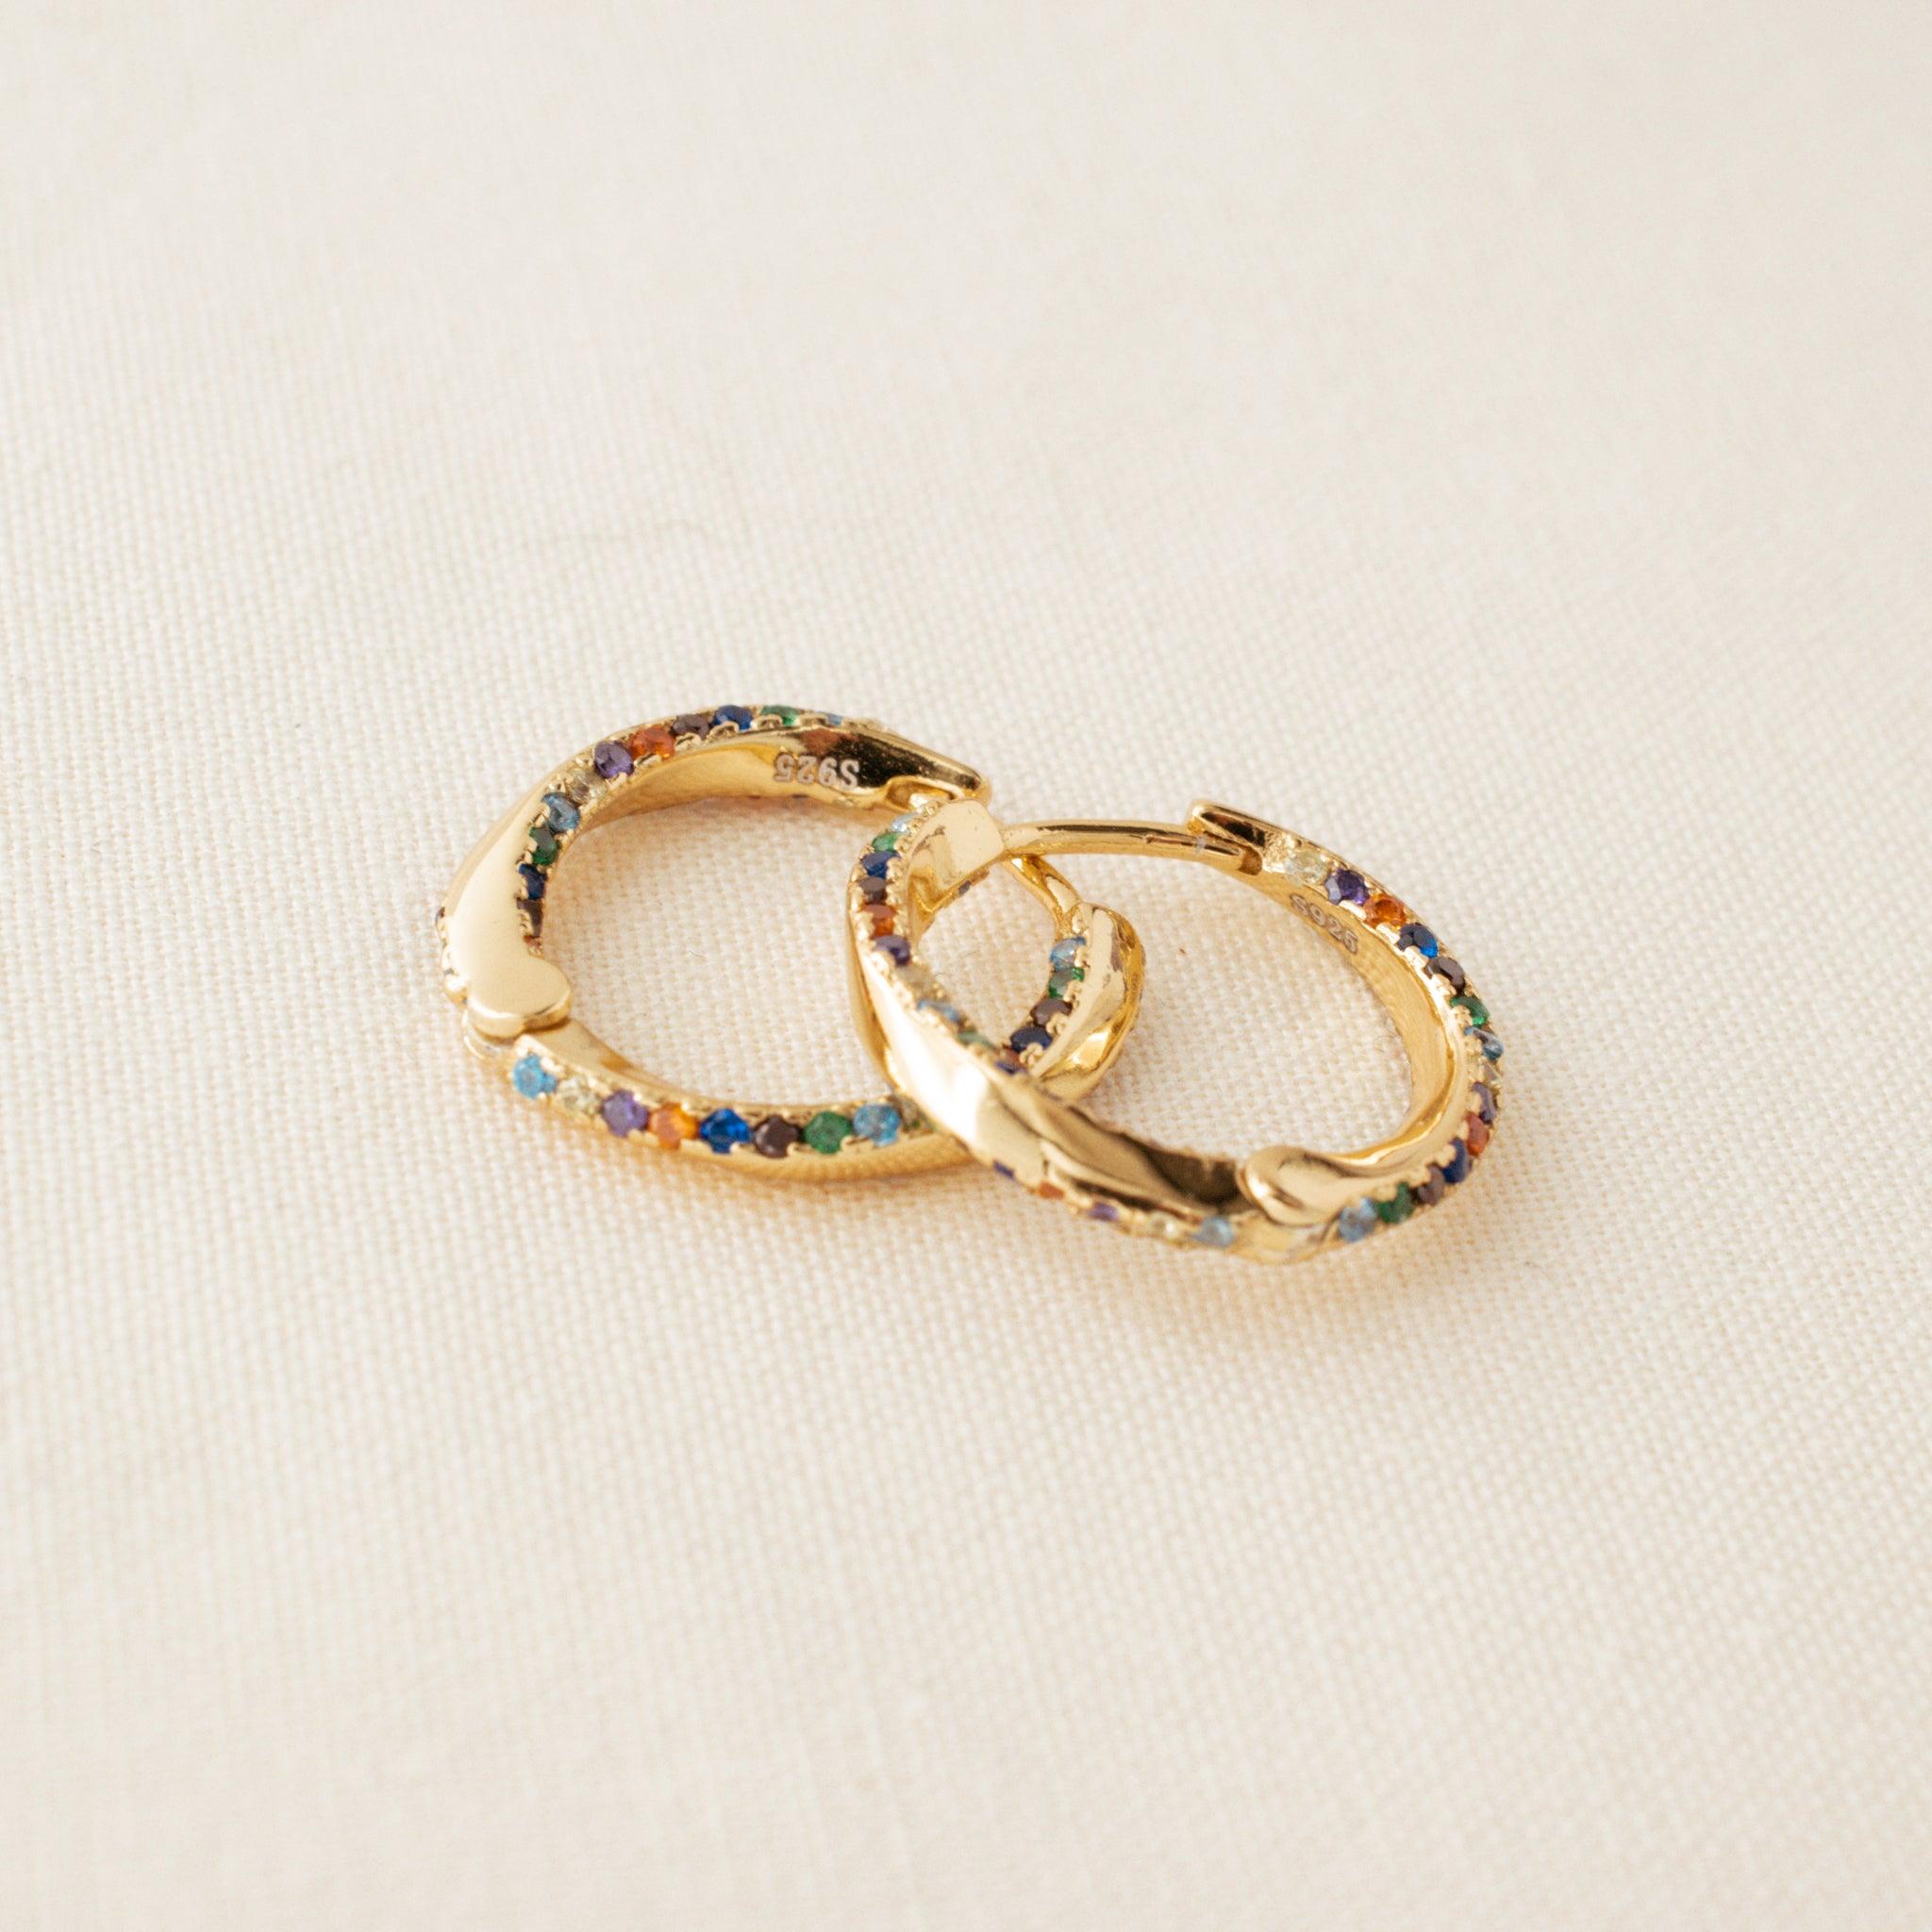 Rainbow Earrings - avantejewel.com